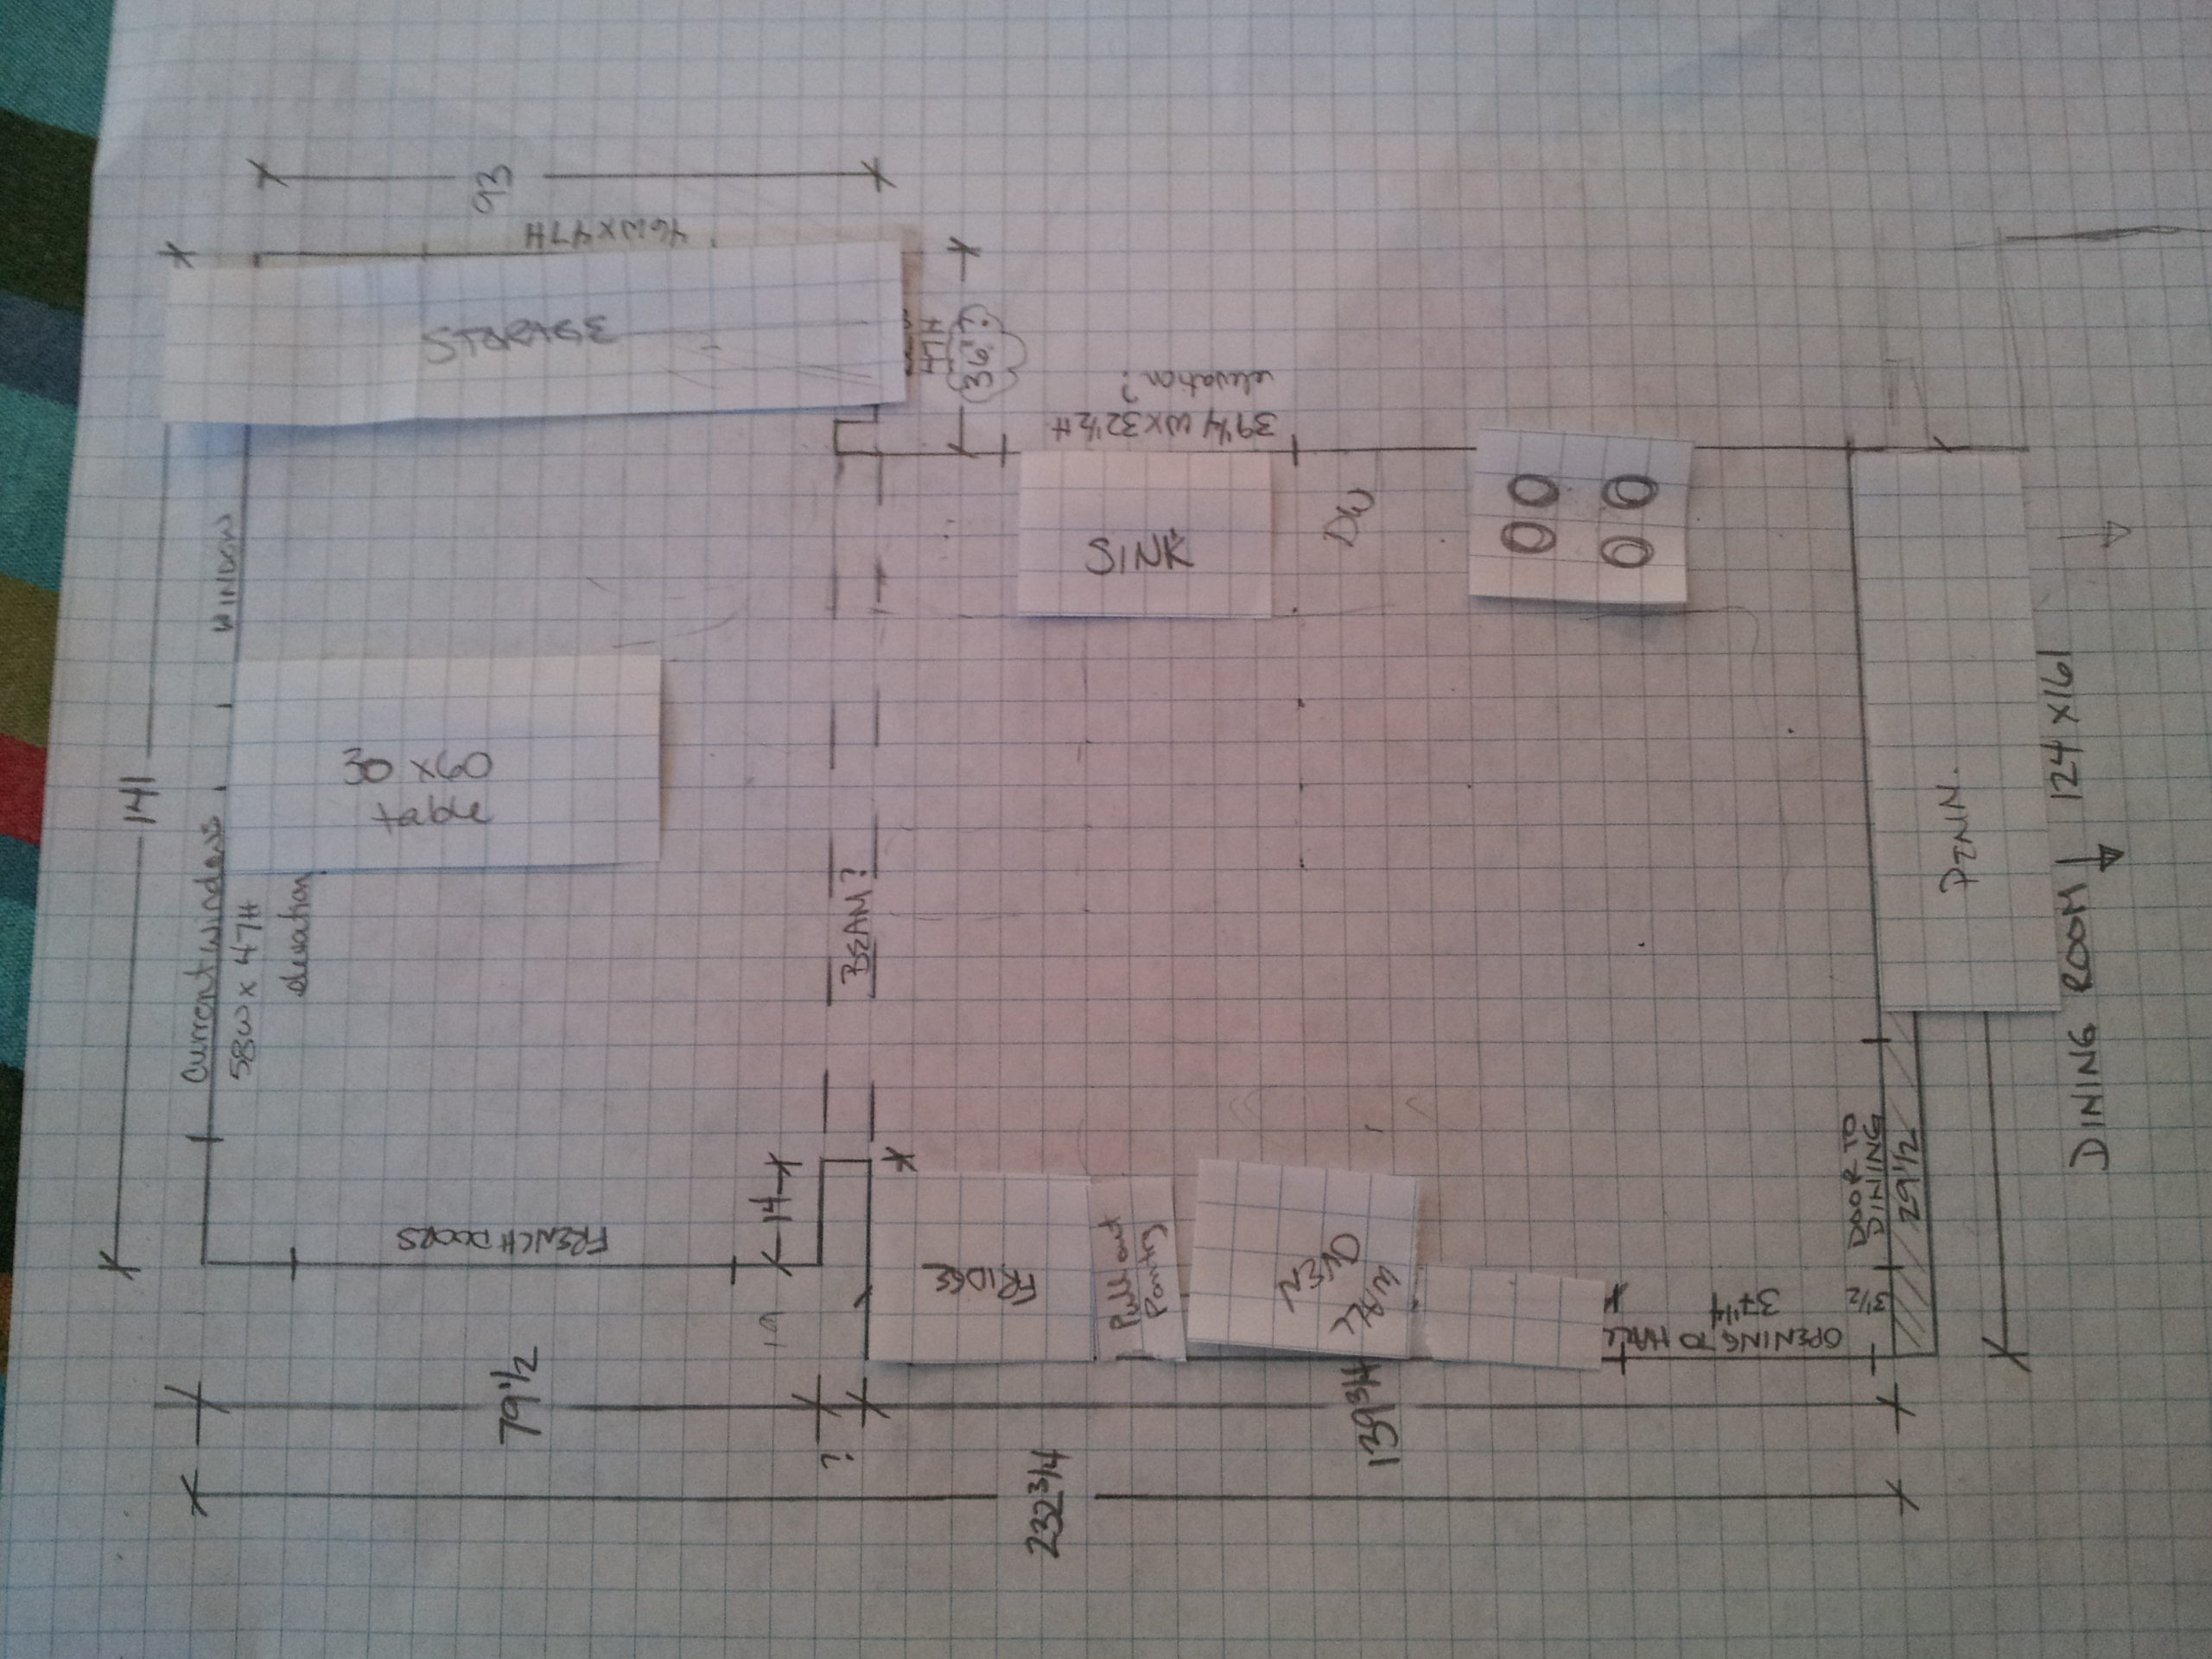 Kitchen layout on grid paper